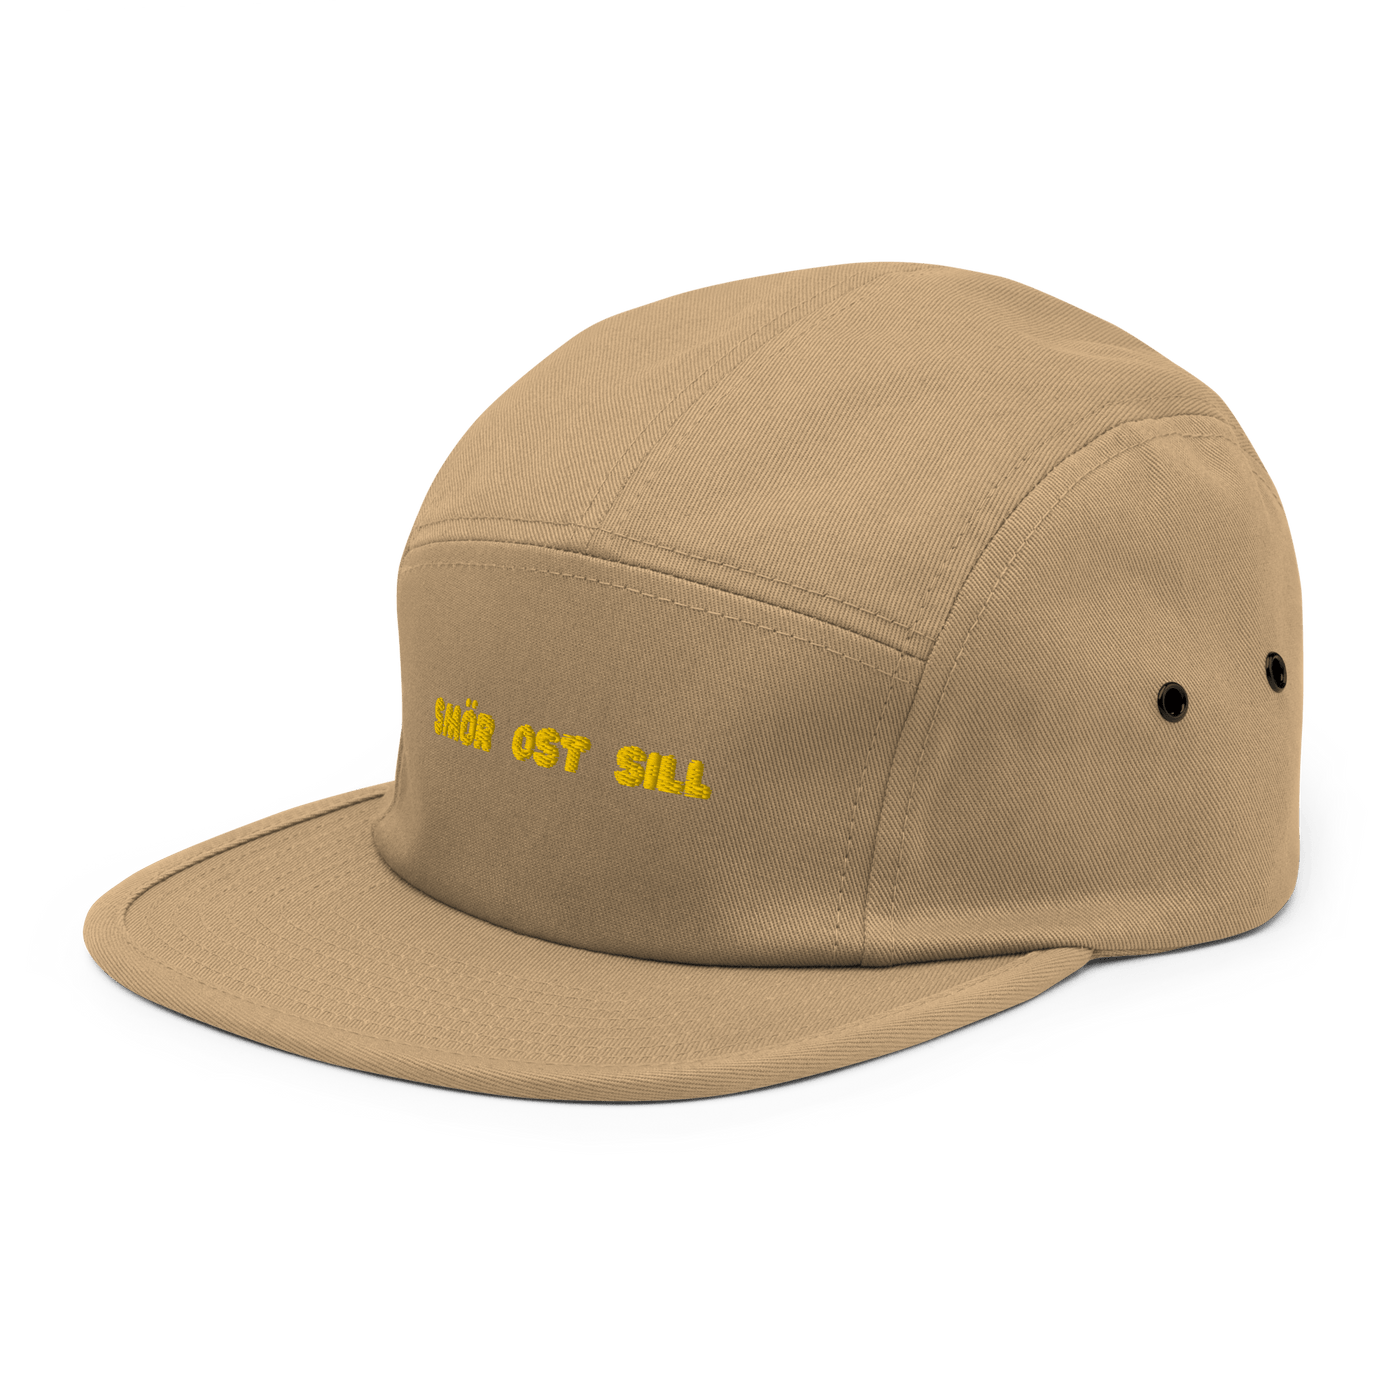 SOS Five Panel Cap - Khaki - Just Another Cap Store